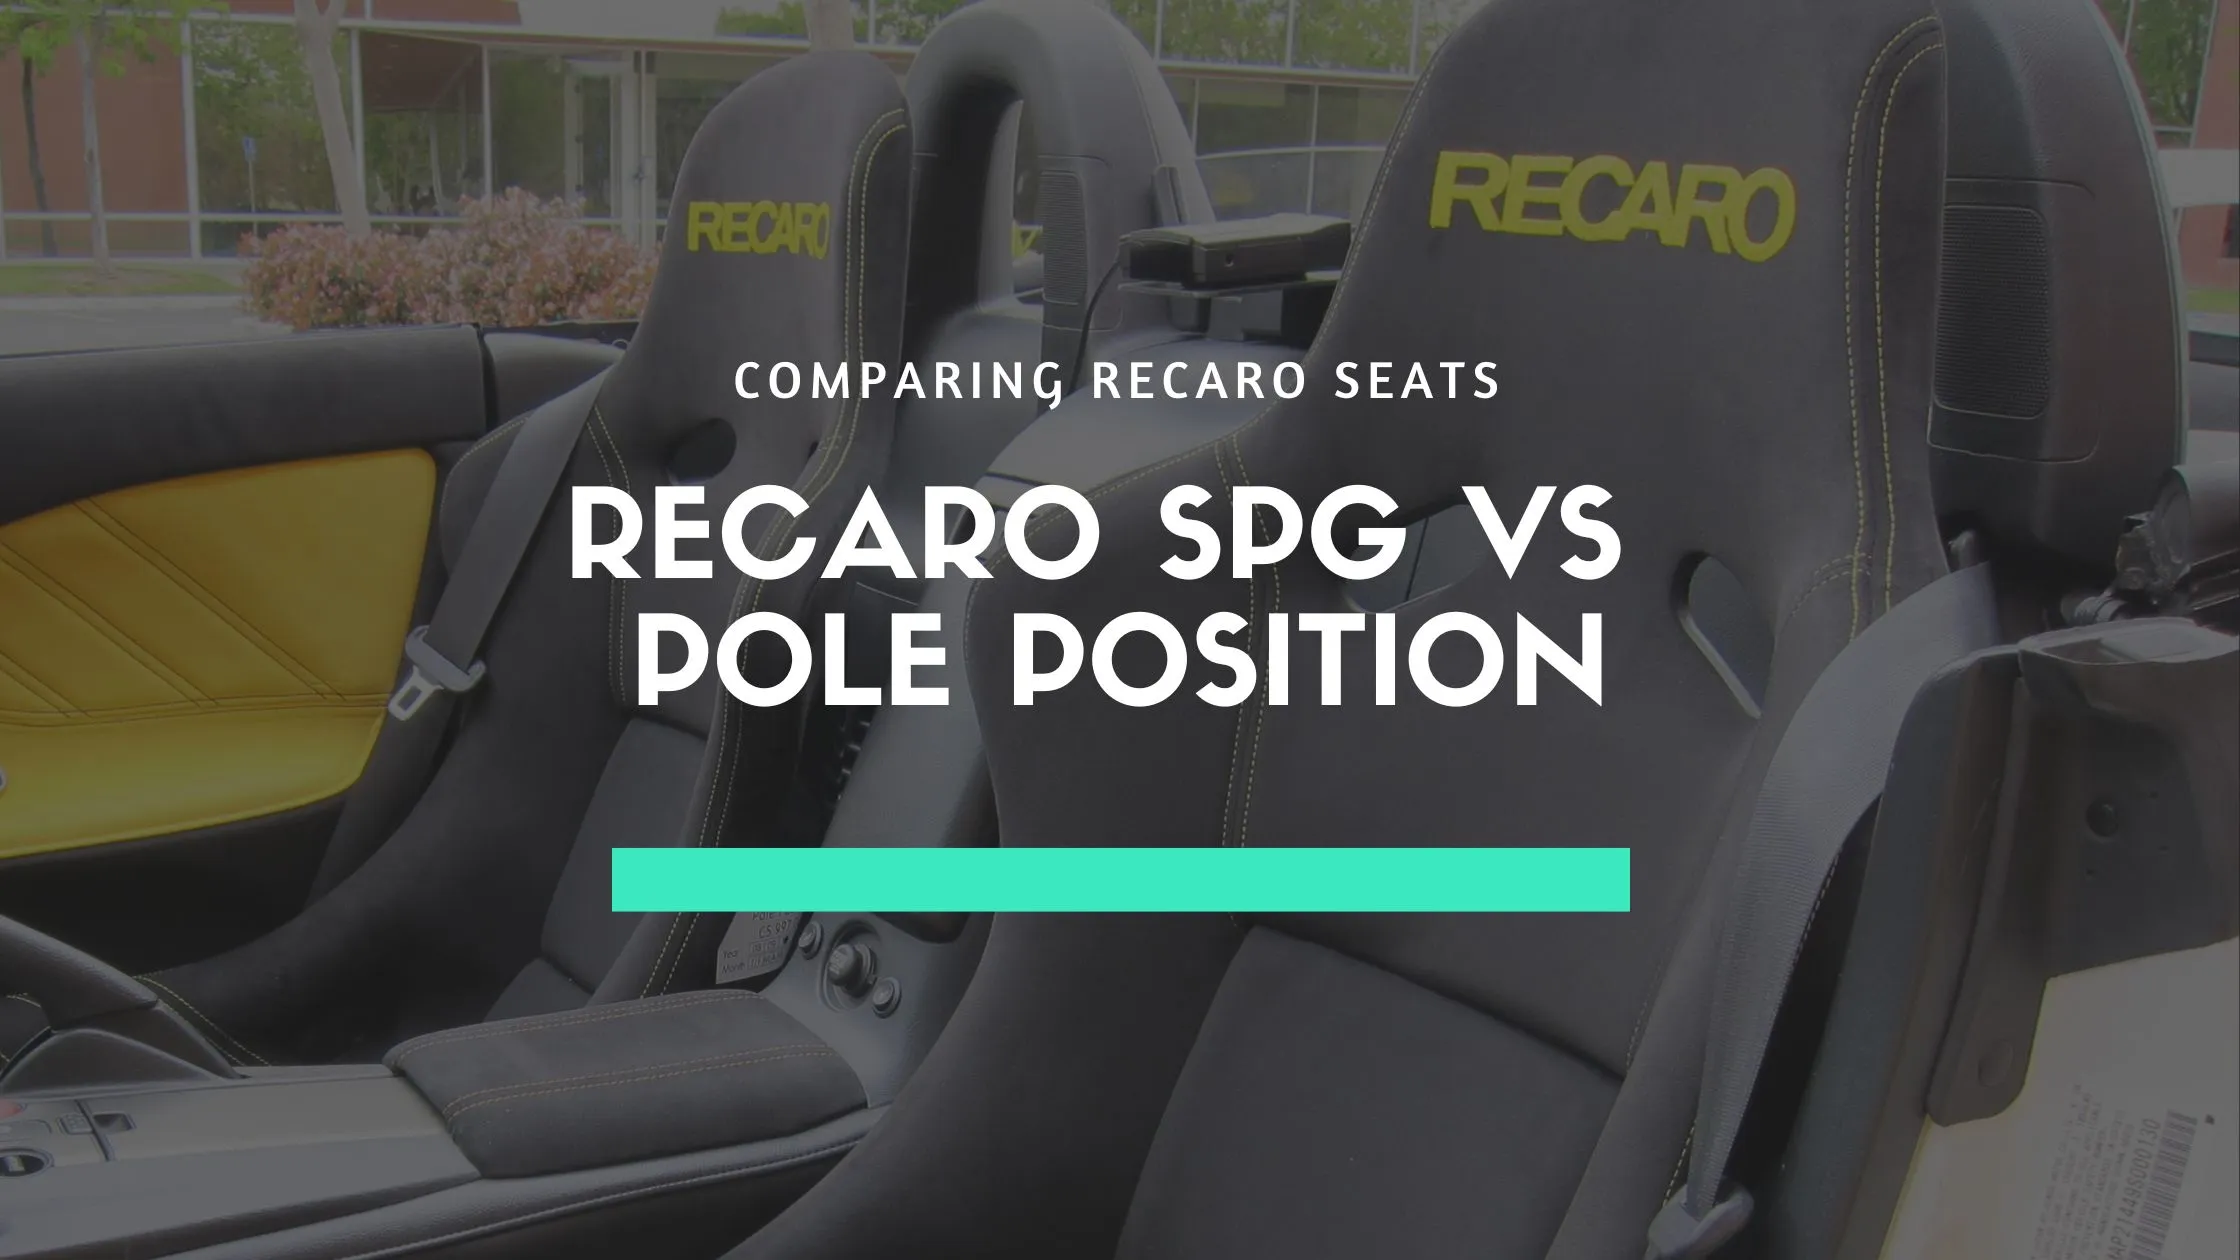 recaro spg vs pole position